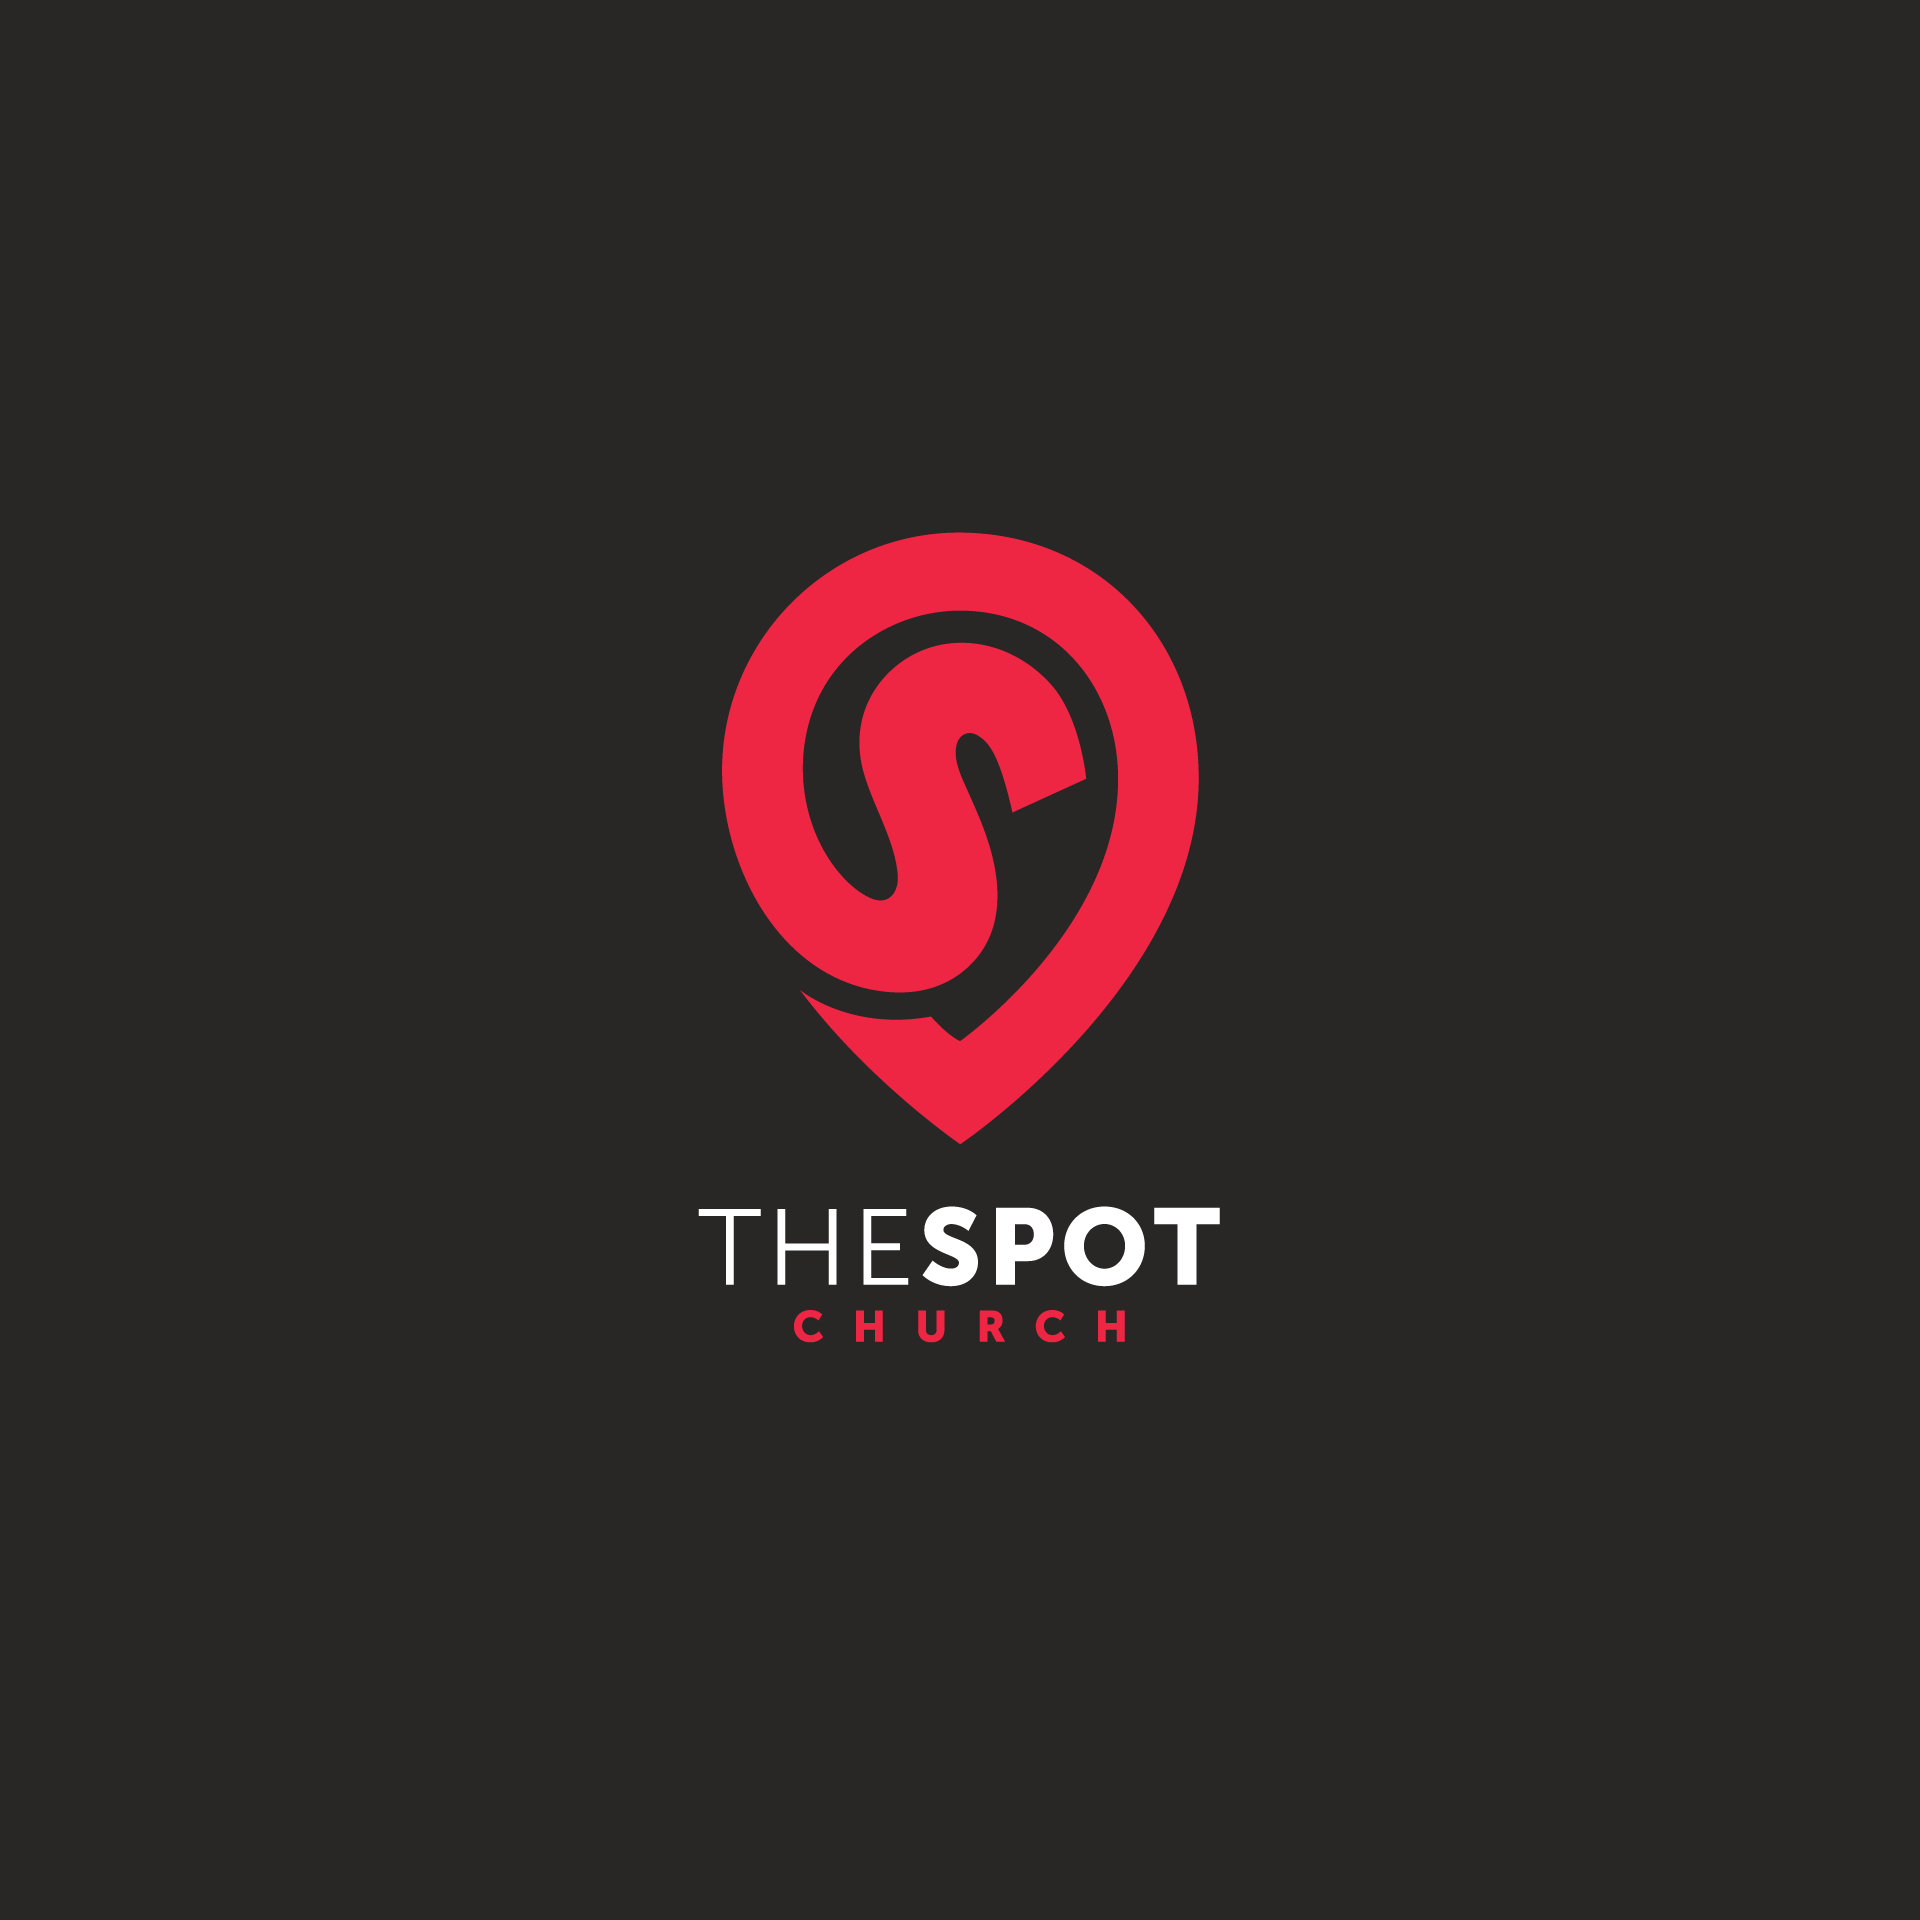 Spot Logo - The Spot Church - A Design Studios